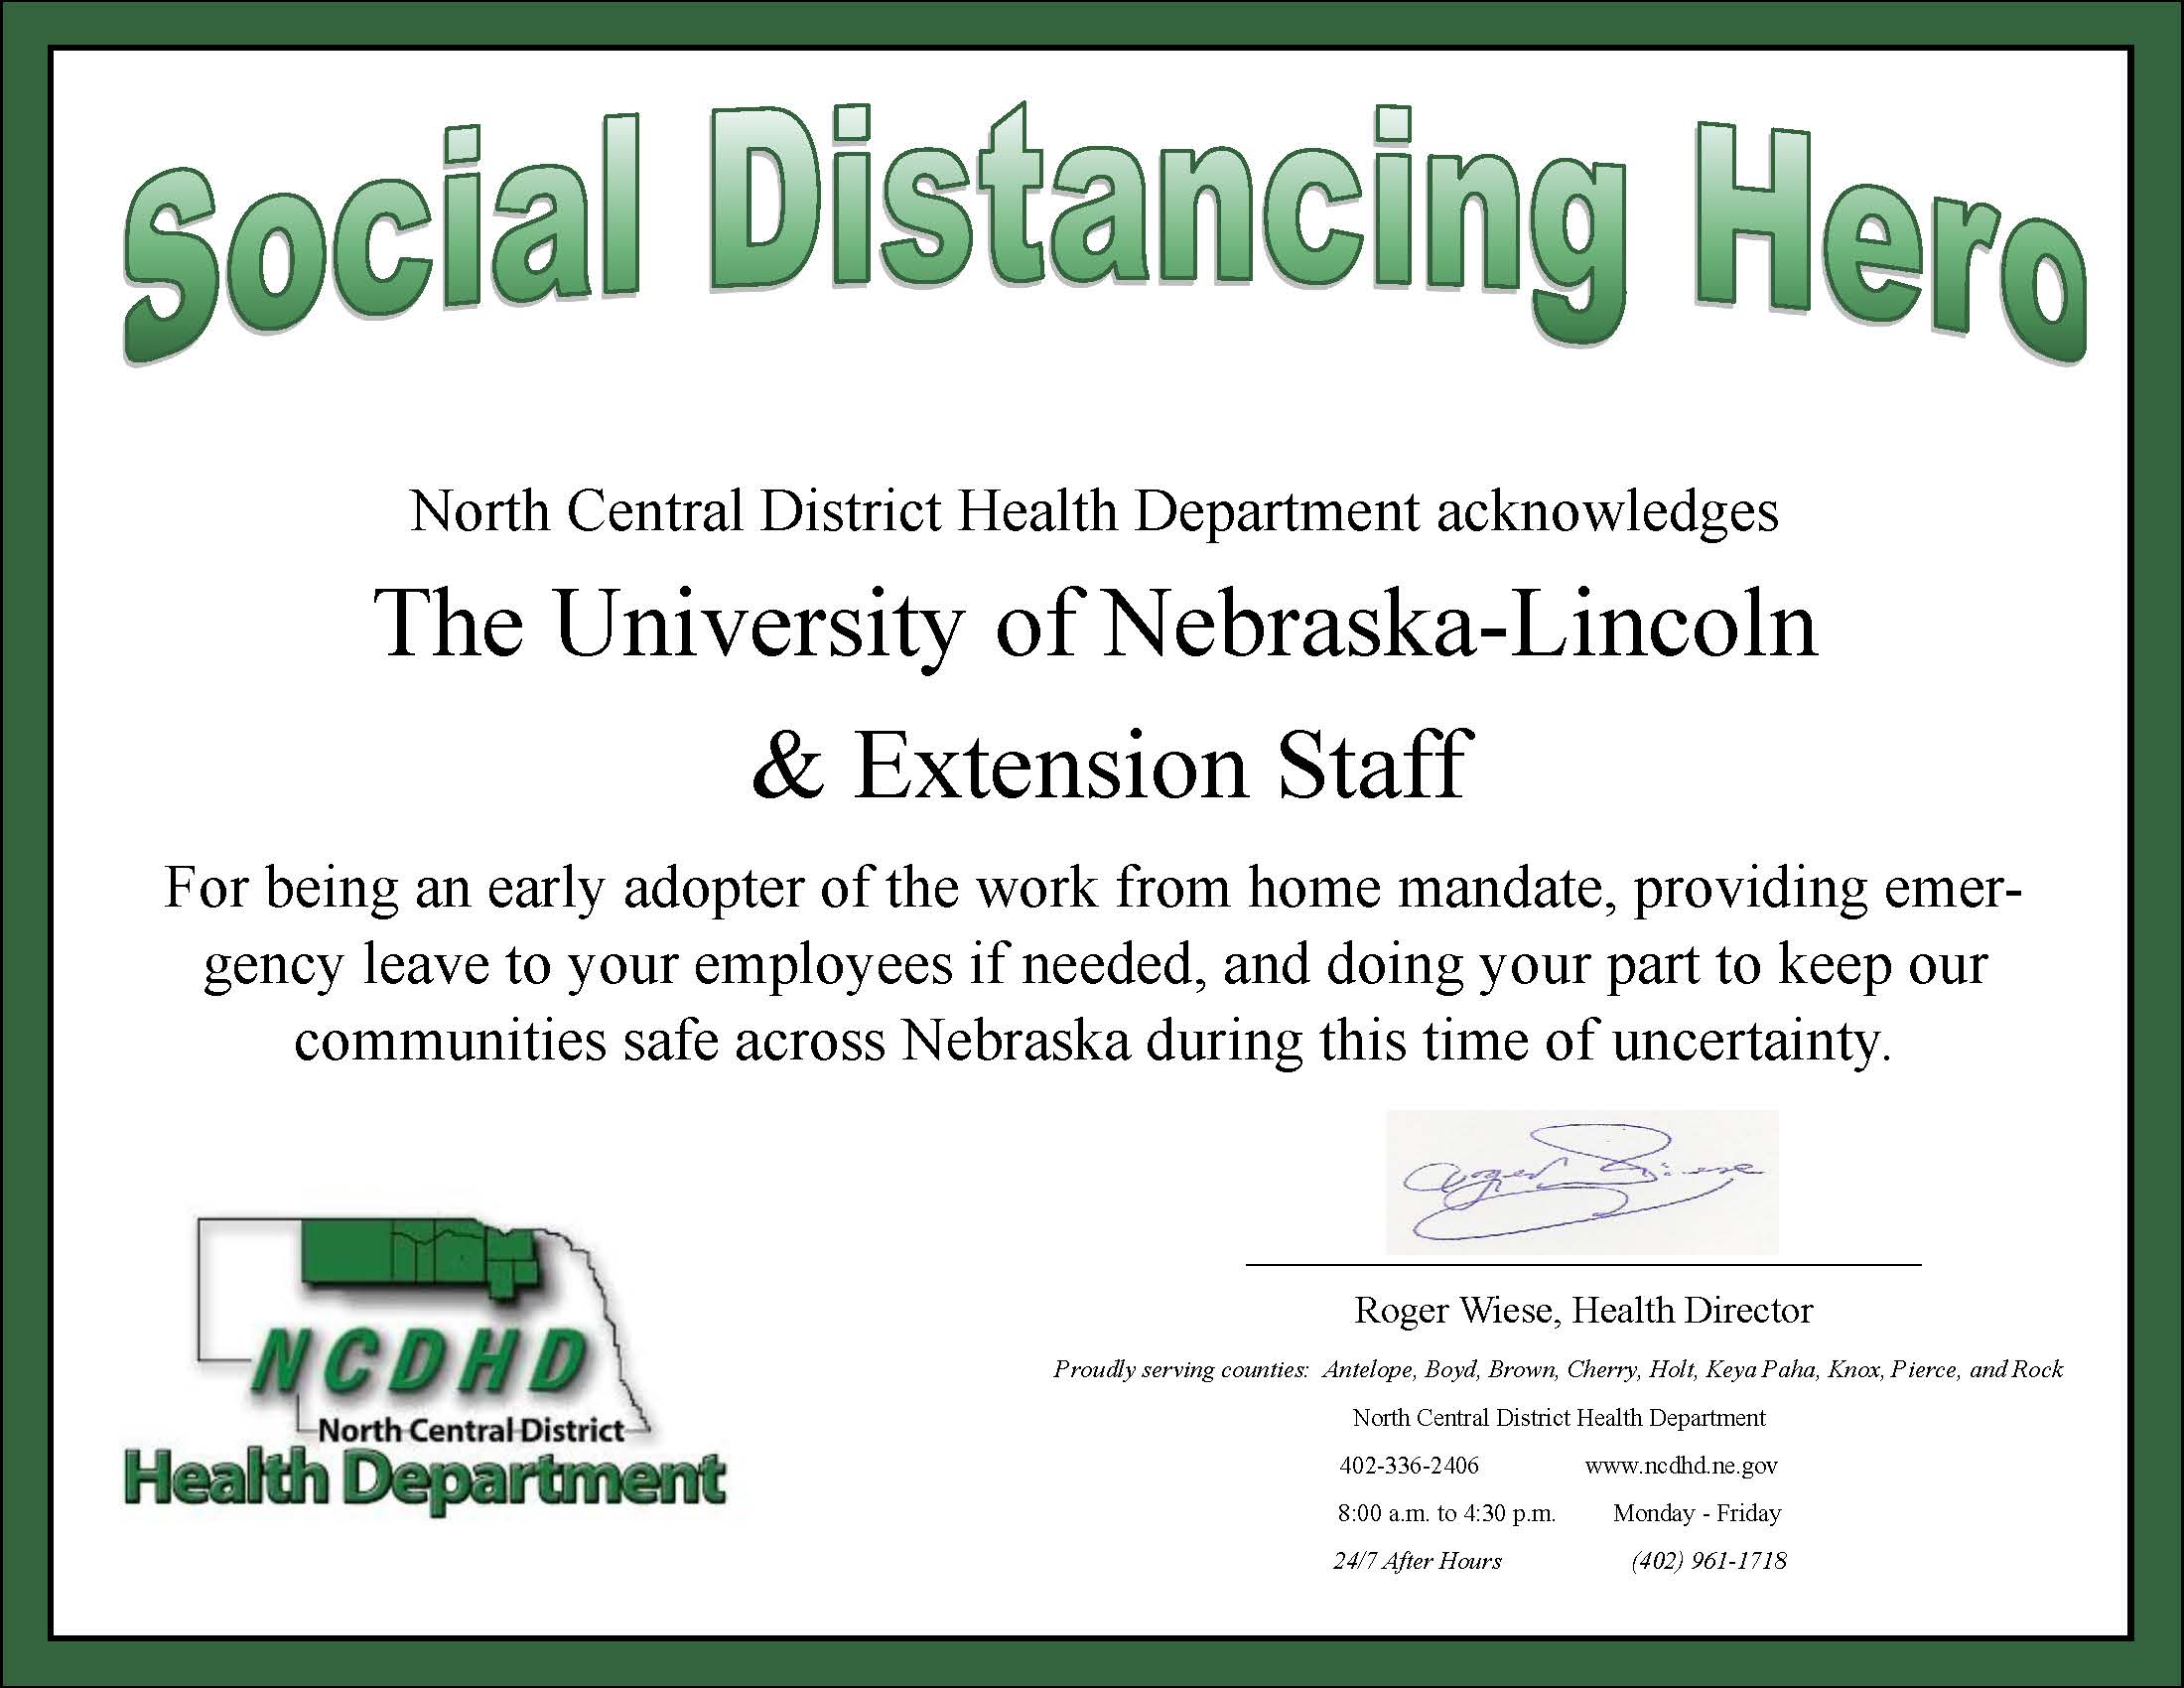 Social distancing hero certificate awarded to Nebraska Extension